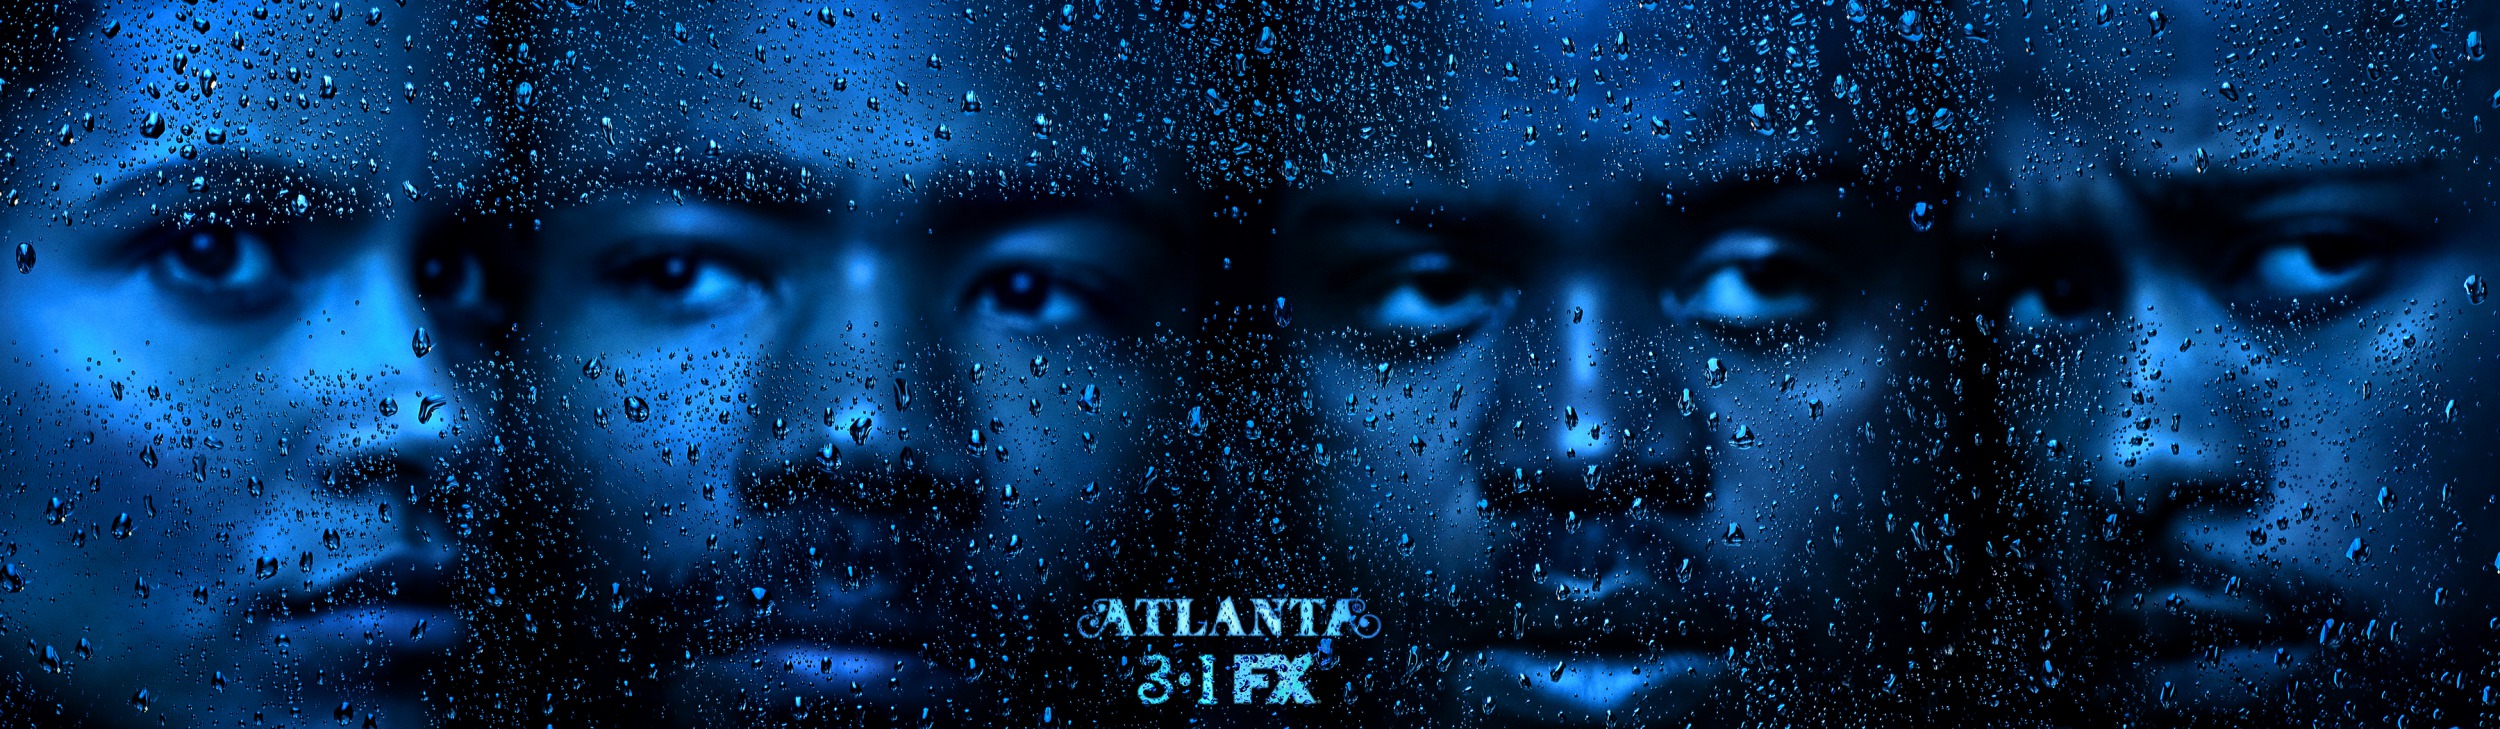 Mega Sized TV Poster Image for Atlanta (#9 of 20)